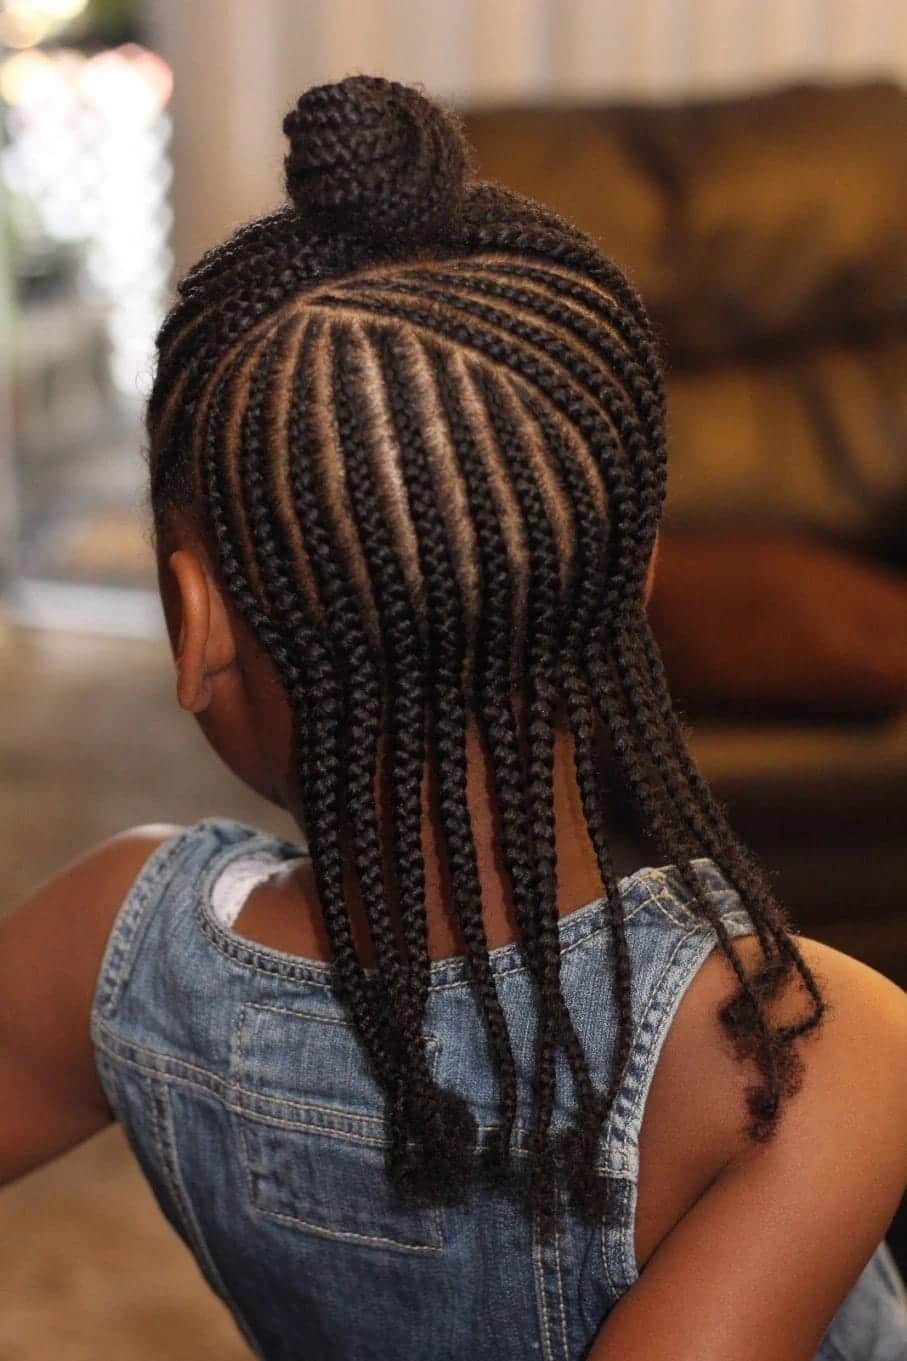 Nigerian cornrow hairstyles
cornrows hairstyles
Nigerian cornrow hairstyles 2018
latest hairstyles in nigeria